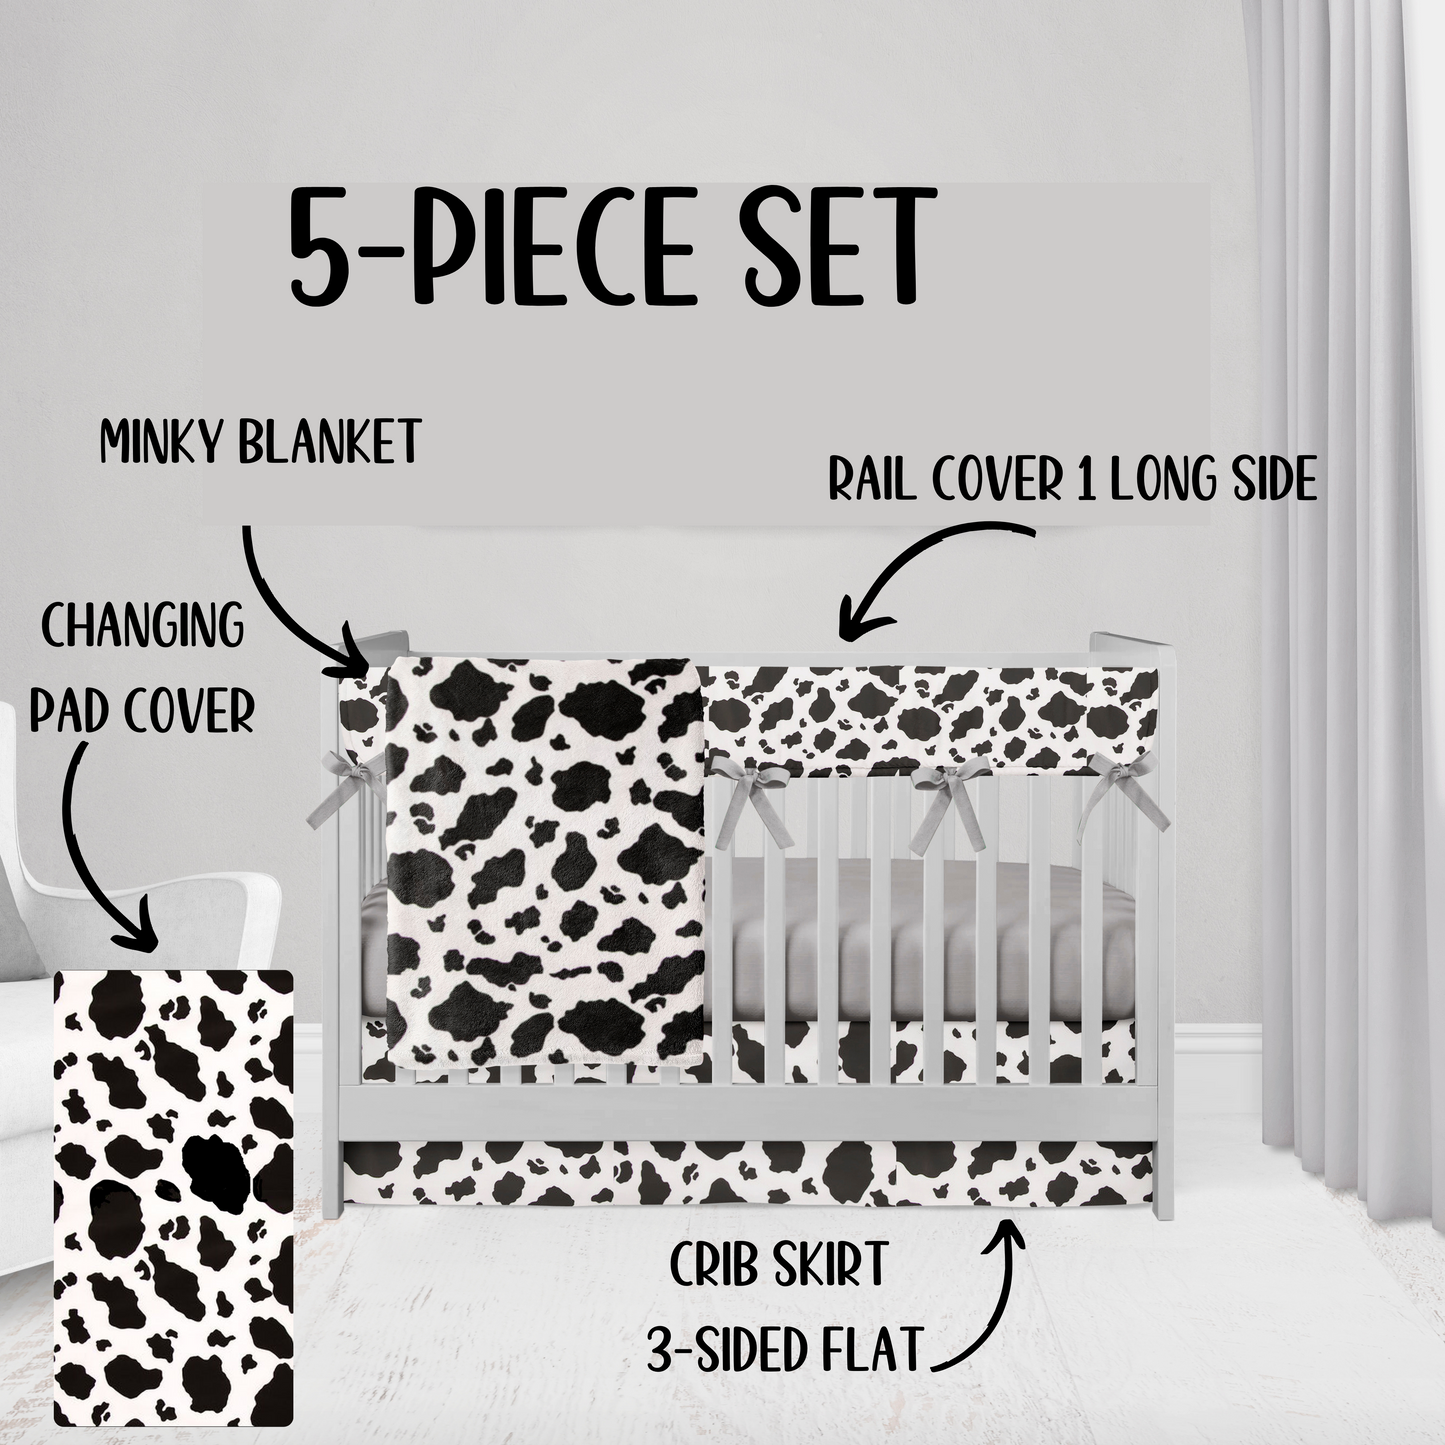 5 piece sets - cow print blanket, cow print rail cover, cow print crib skirt & gray crib sheet. Cow print crib sheet (not shown is also available)